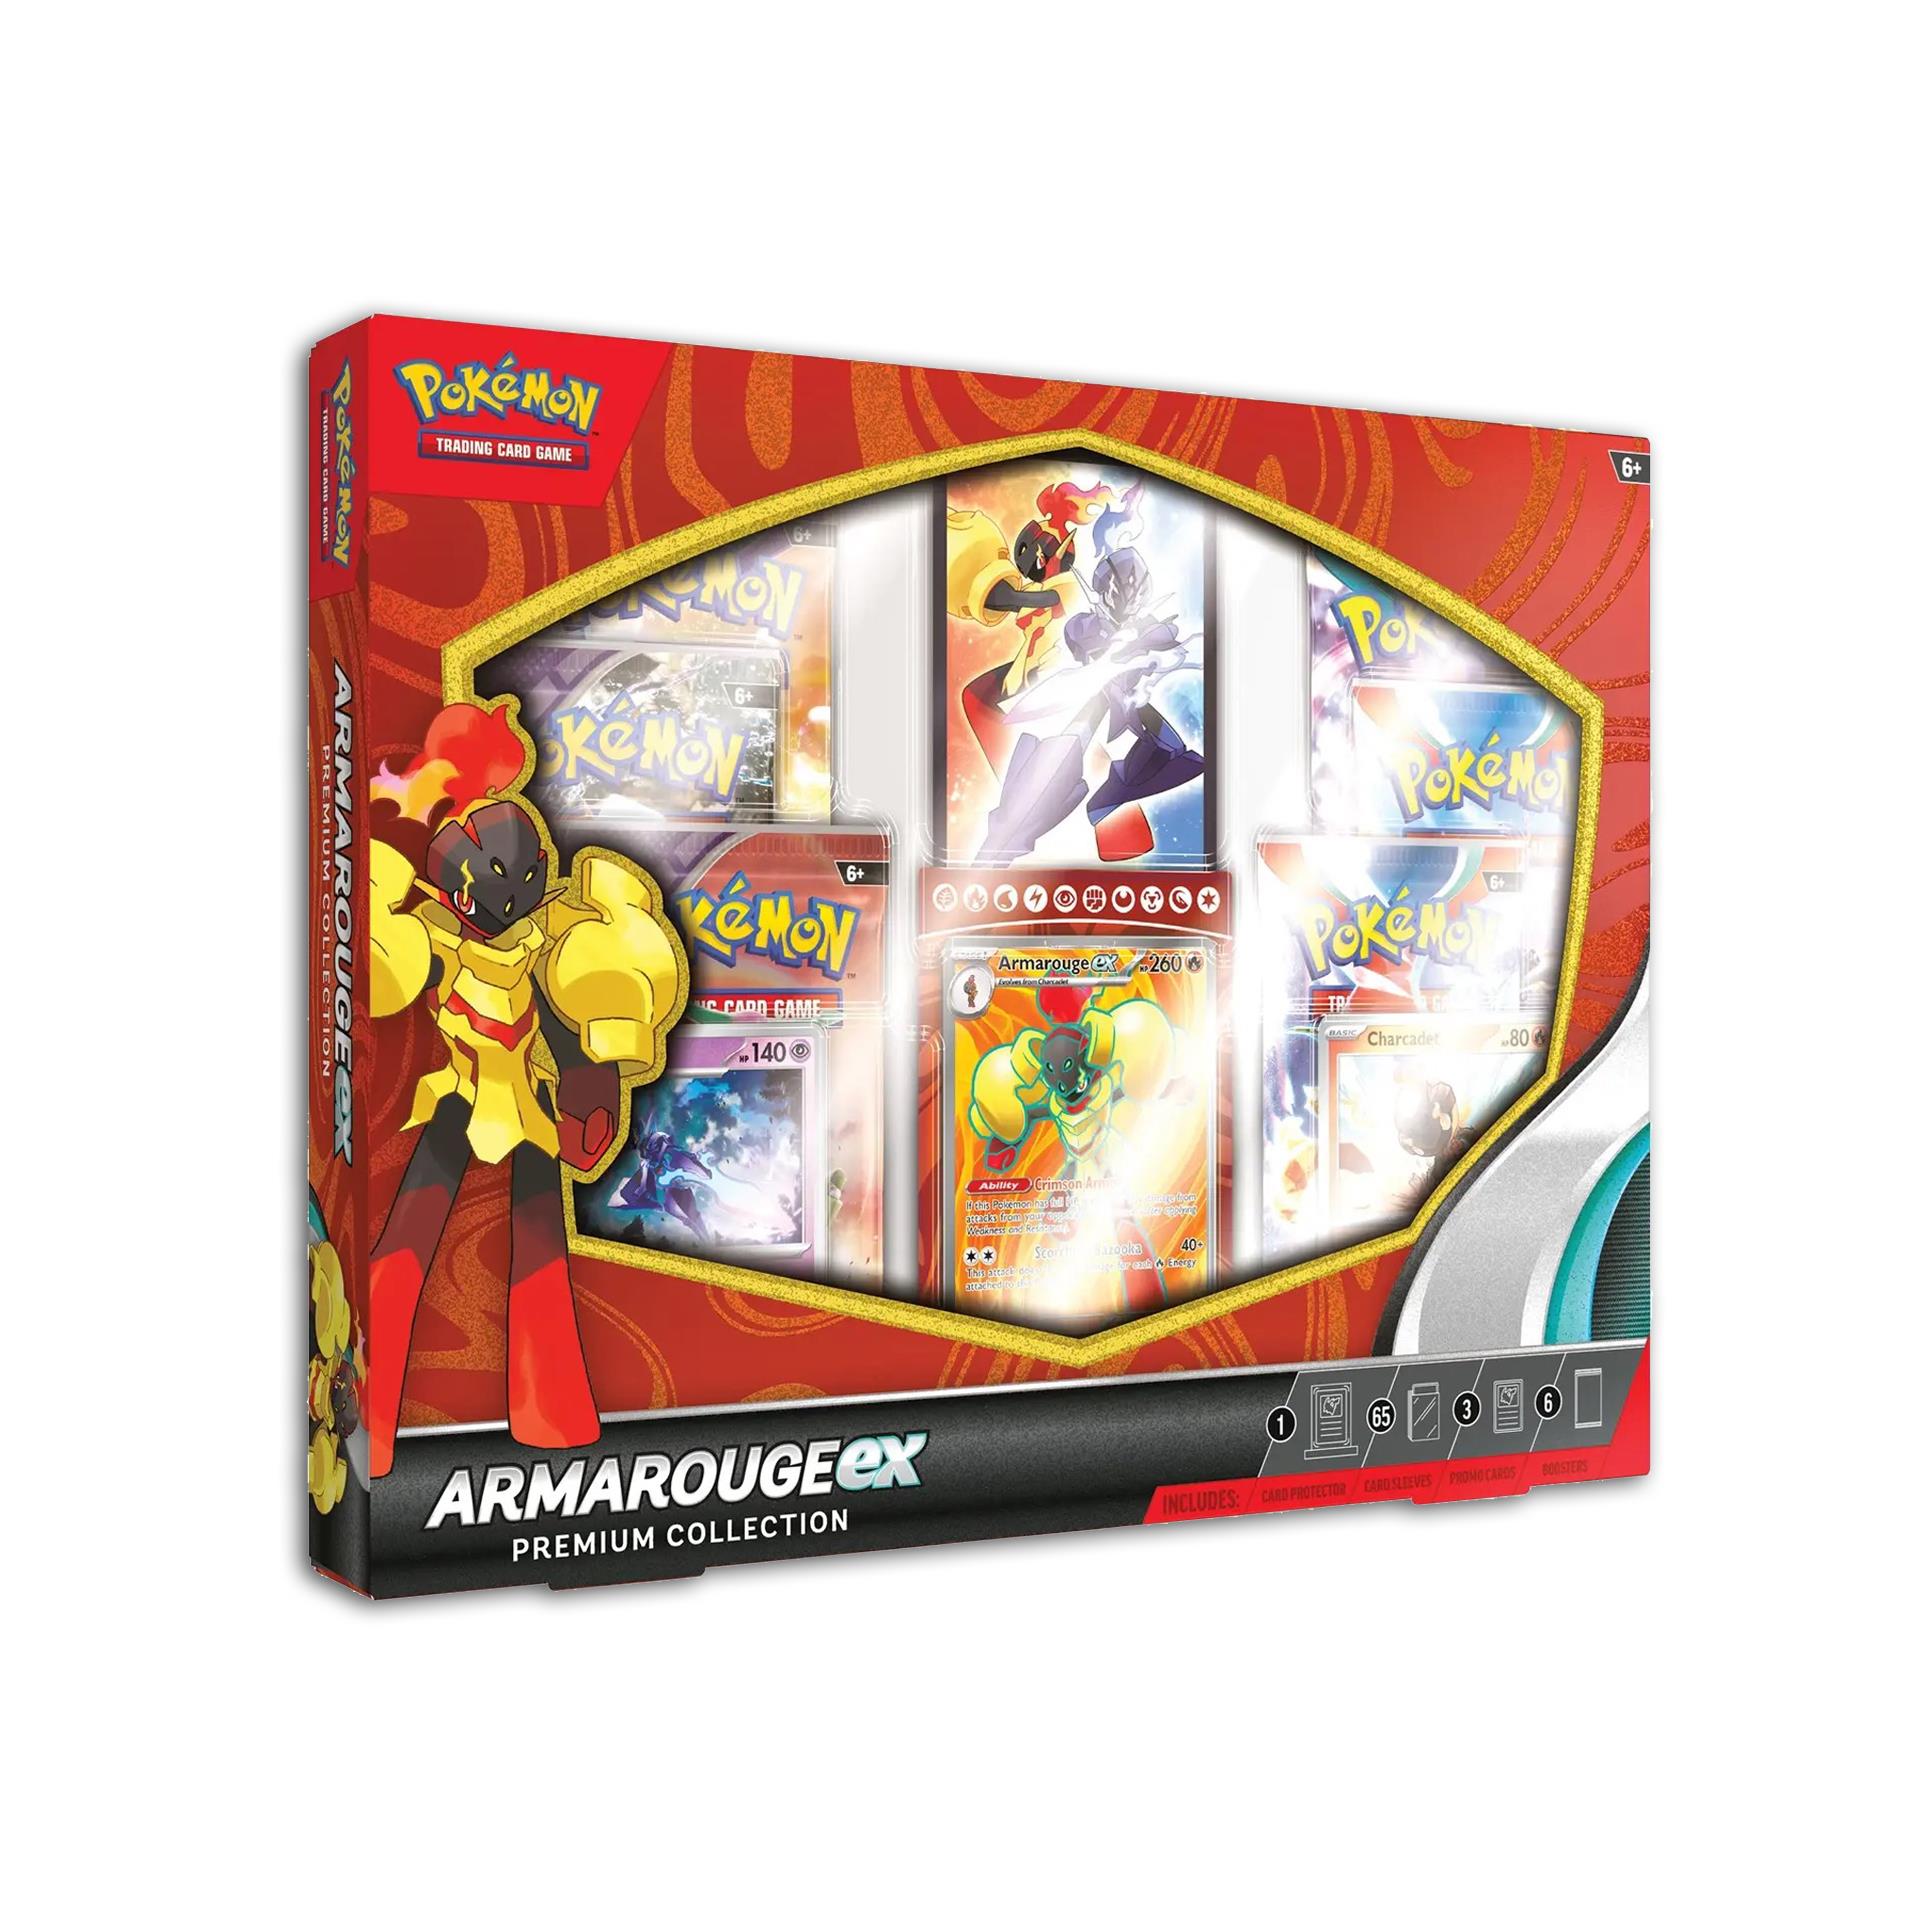 Pokémon Armarouge ex Premium Collection (engl.)